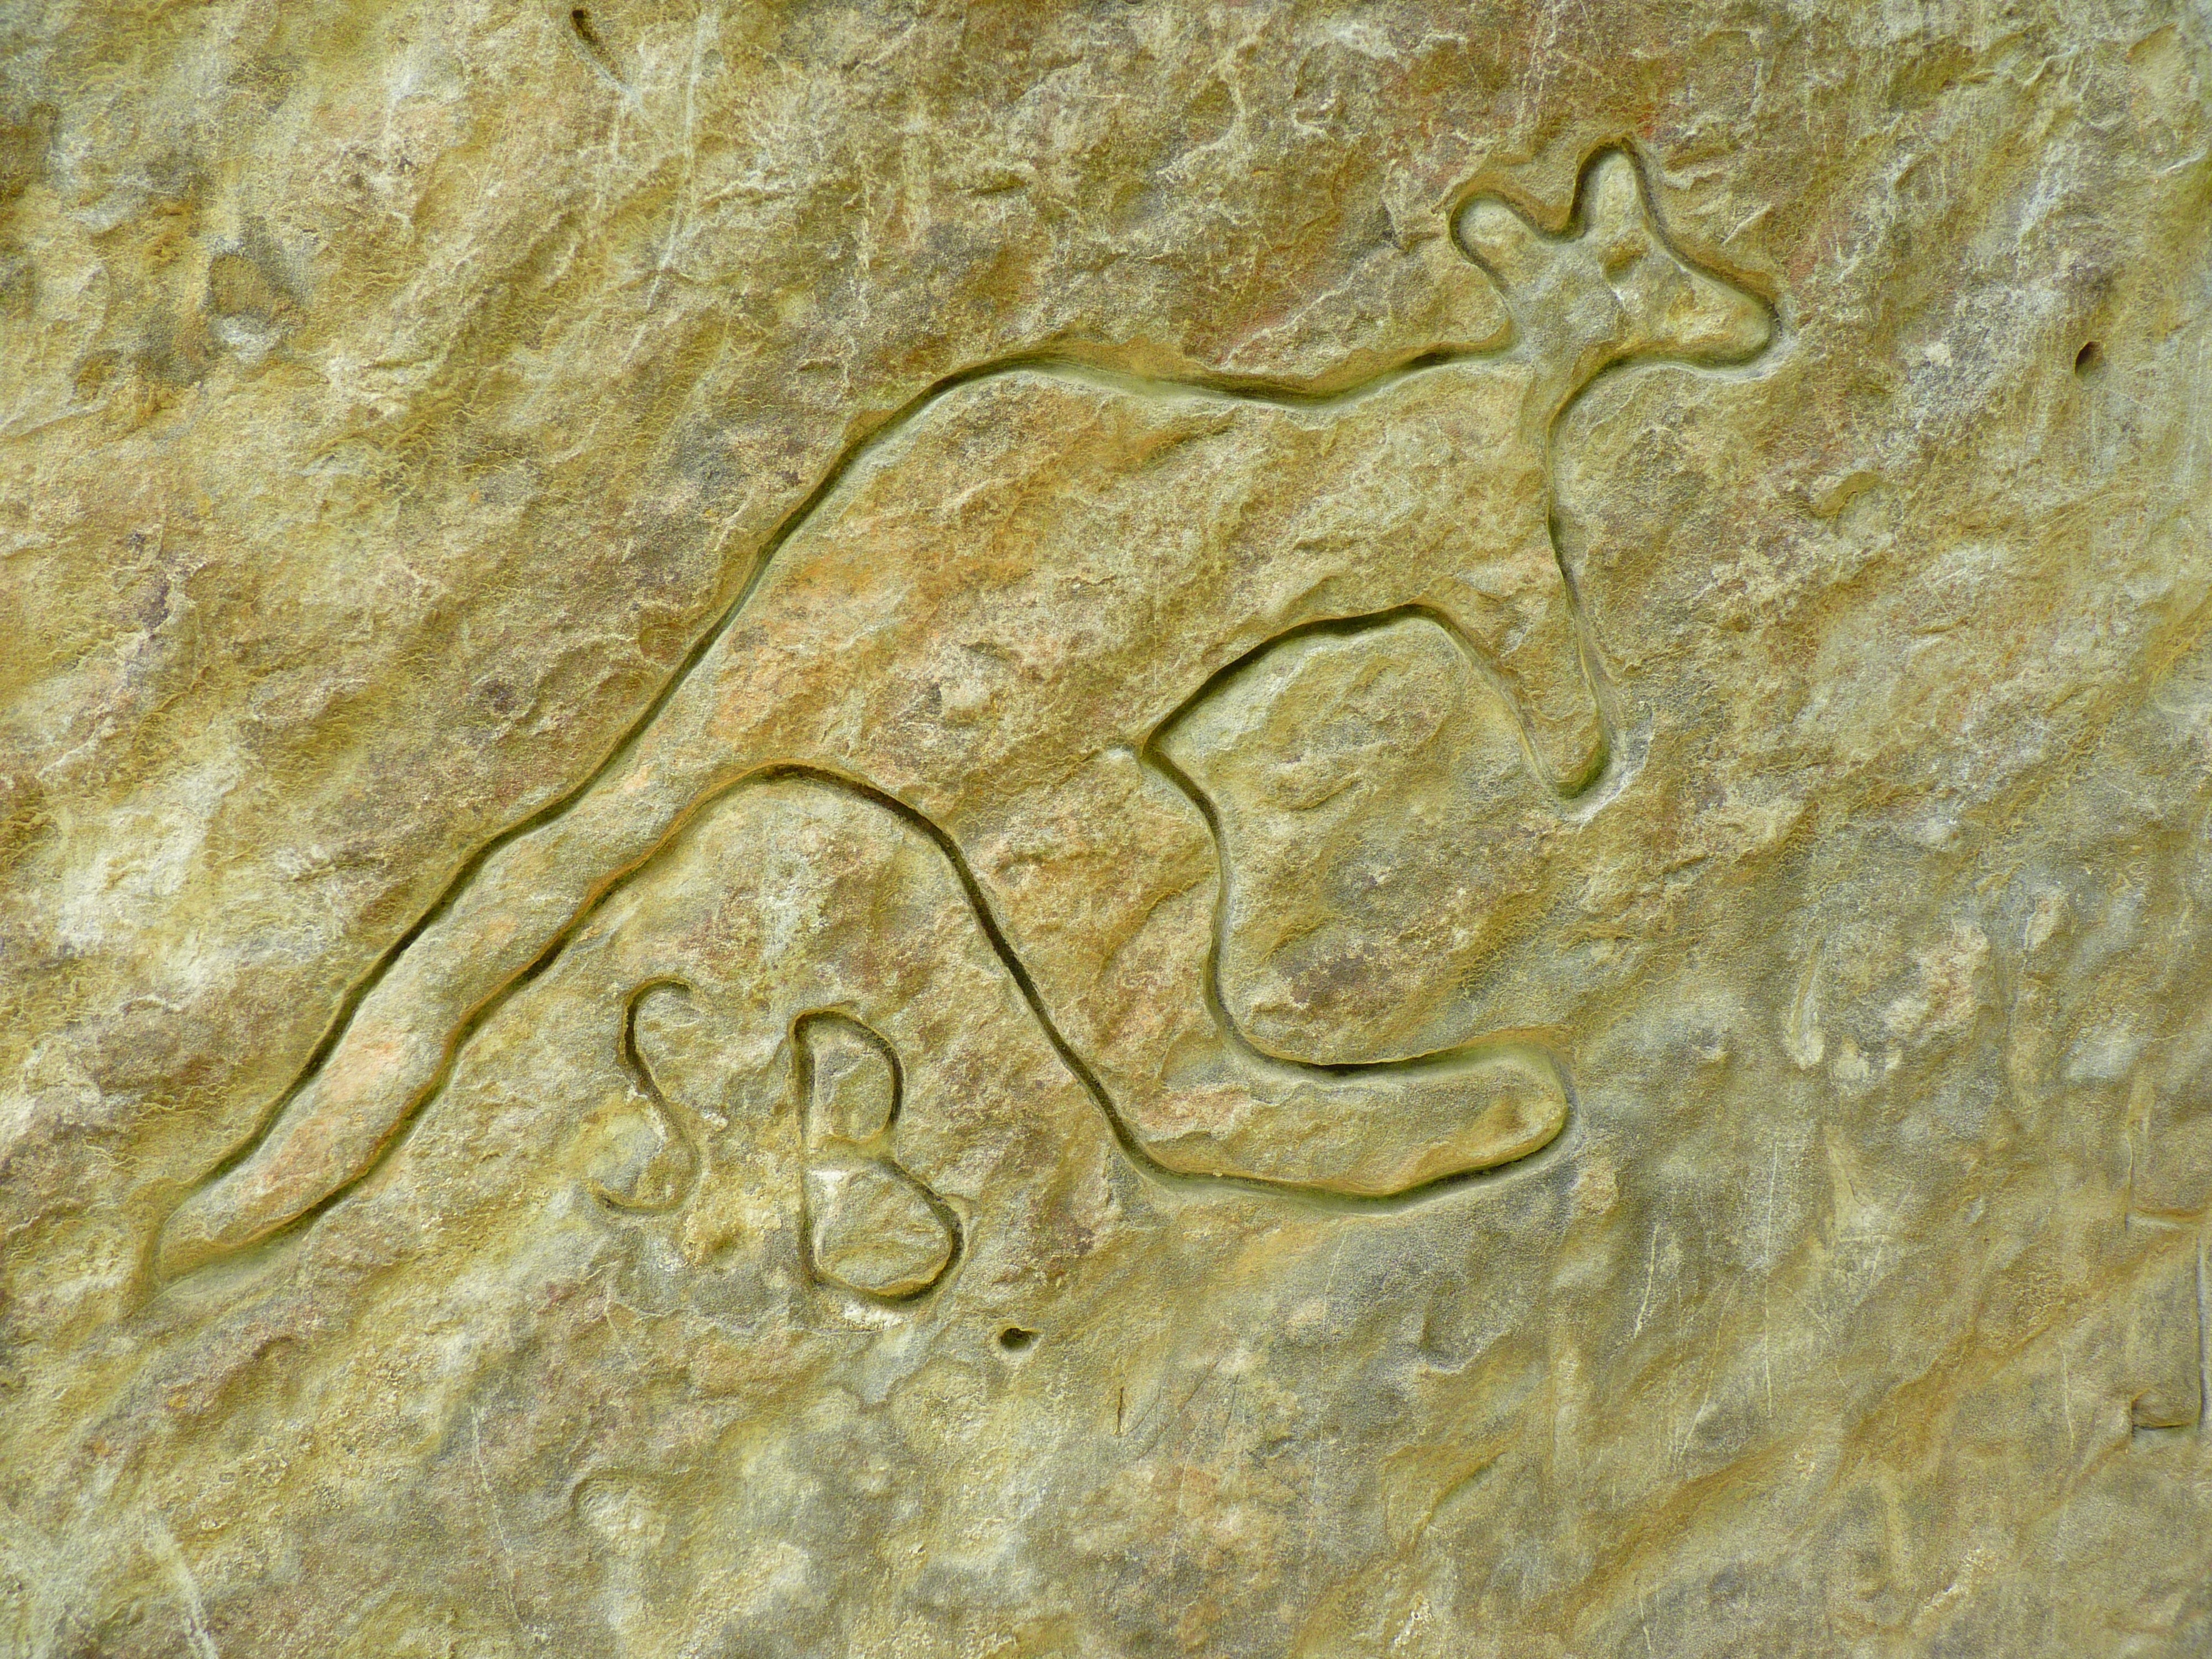 stone engrave kangaroo